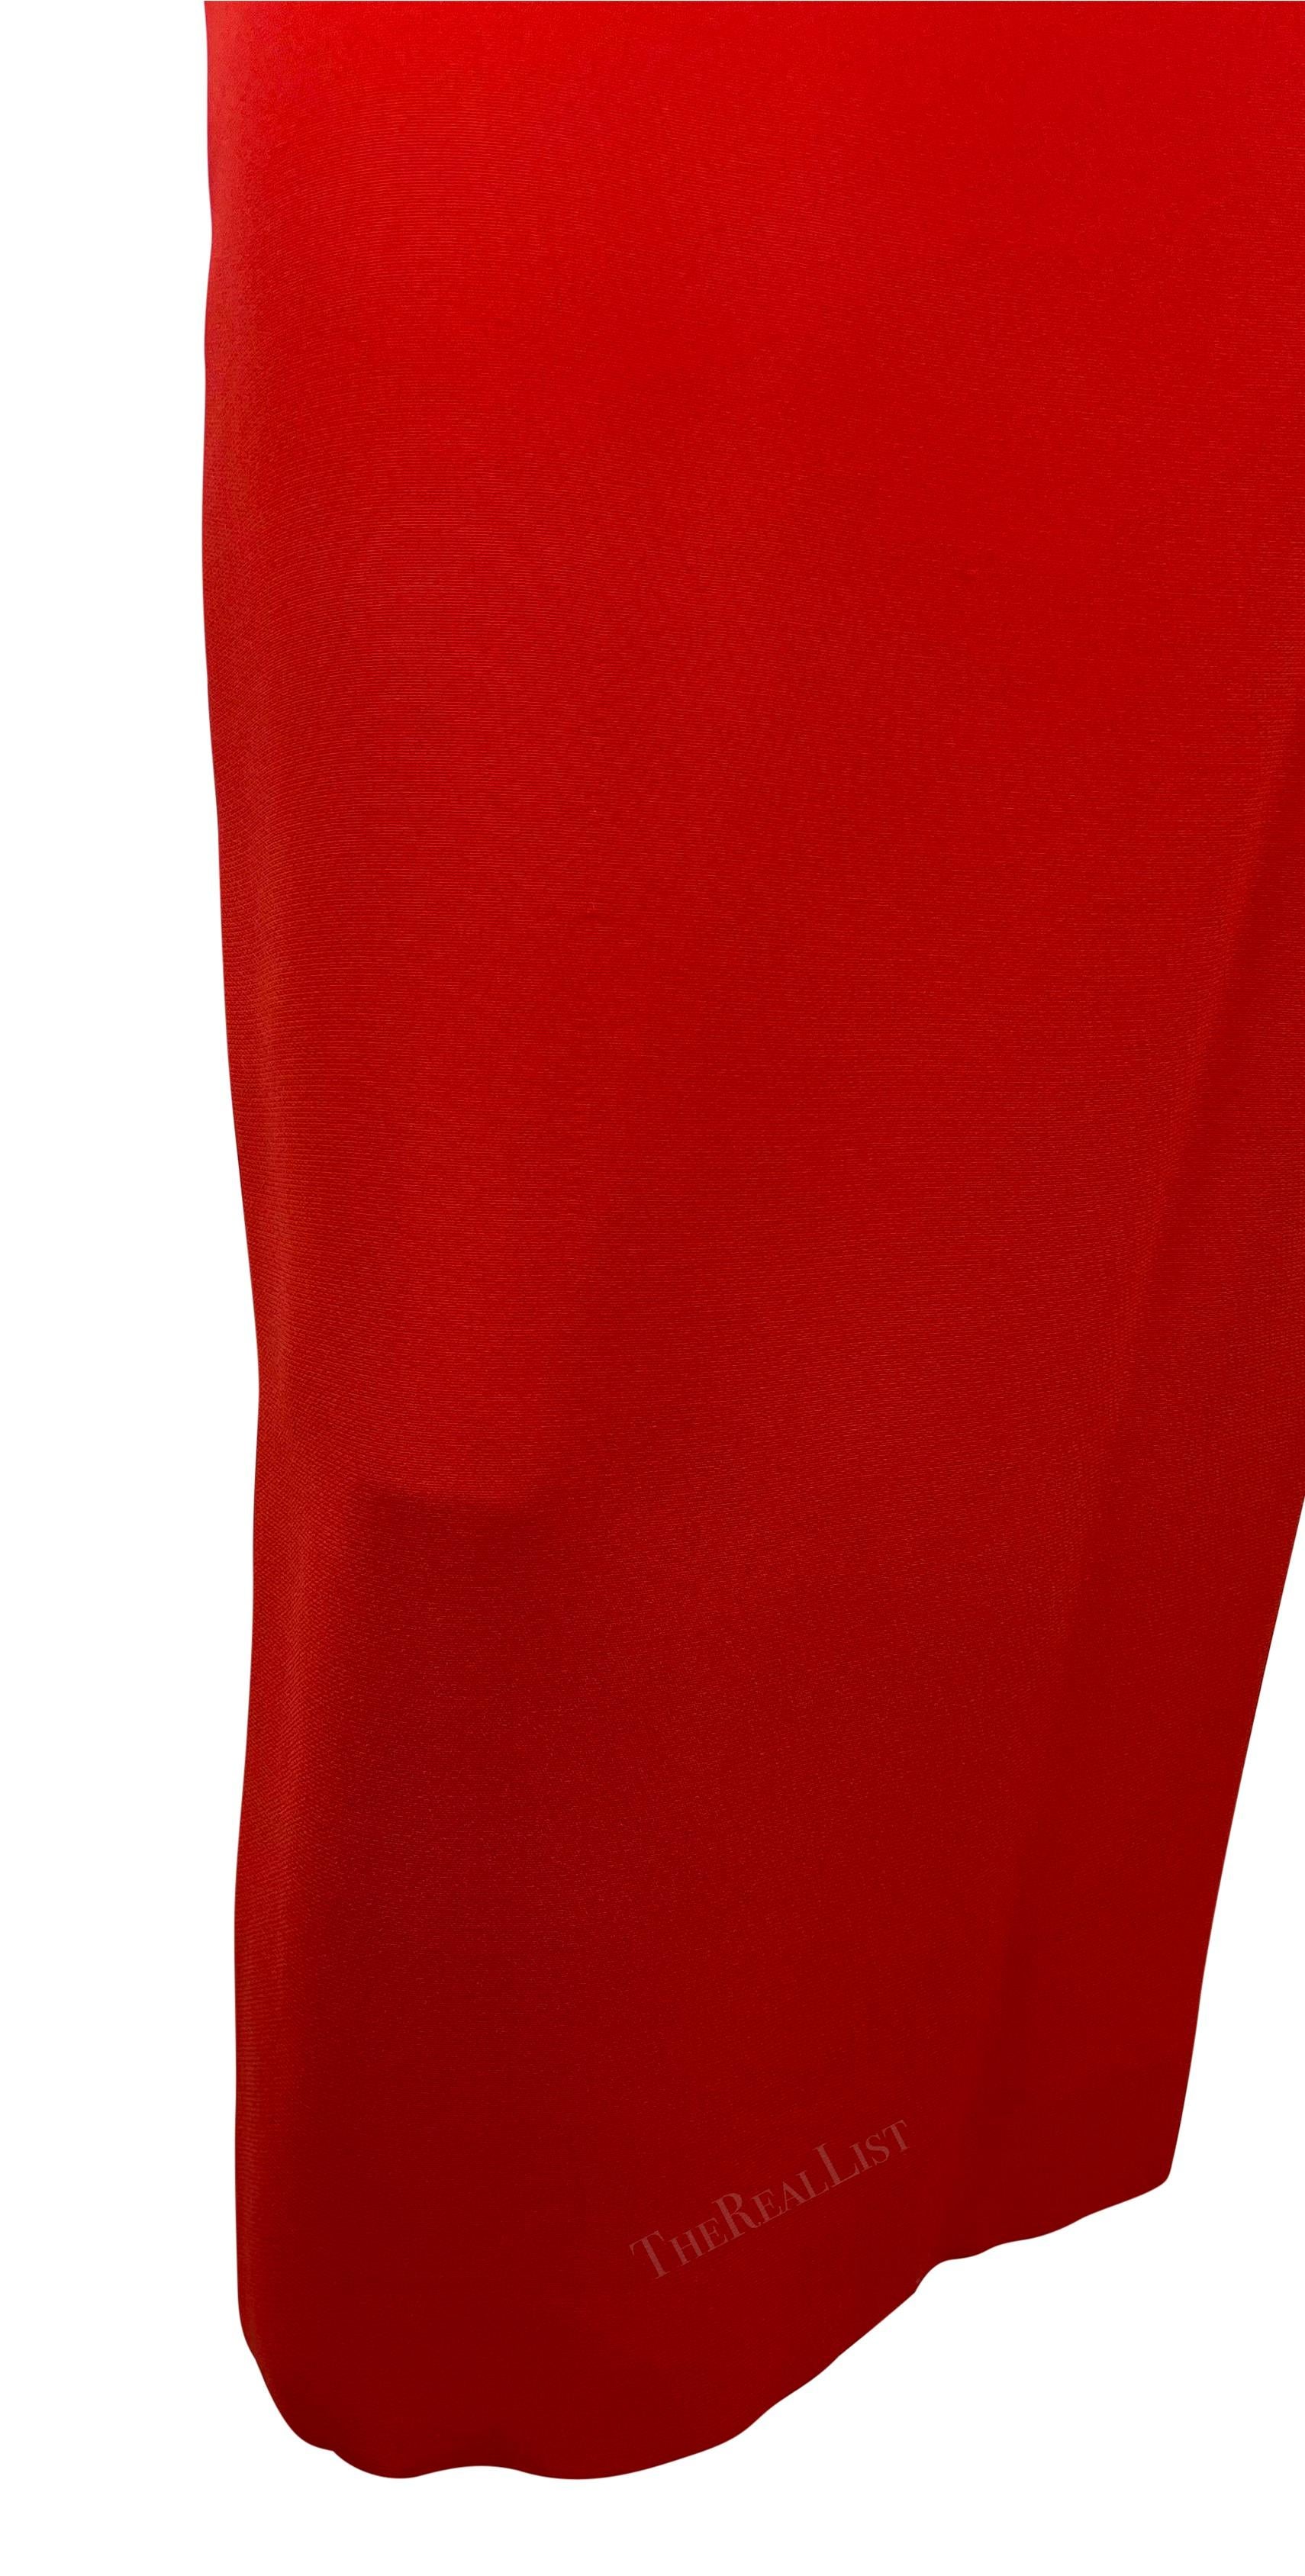 S/S 1993 - Gianni Versace Runway Ad Red - Robe sans manches à dos plongeant en vente 8